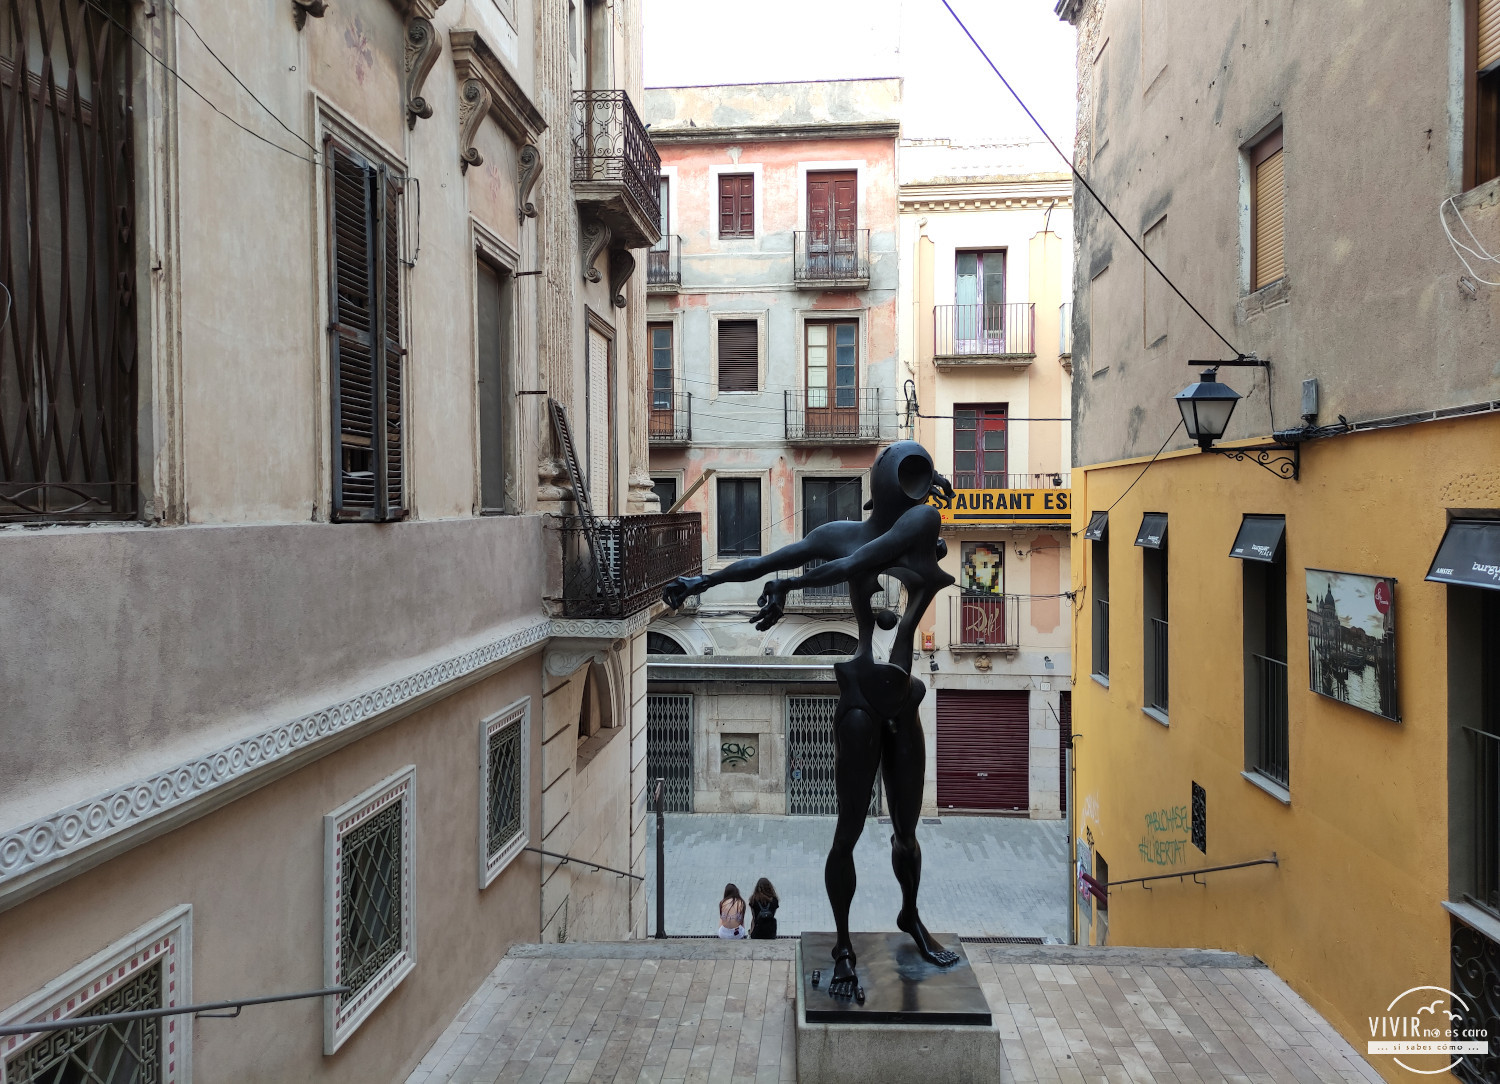 Escultura de Dali en Figueres (Gerona)